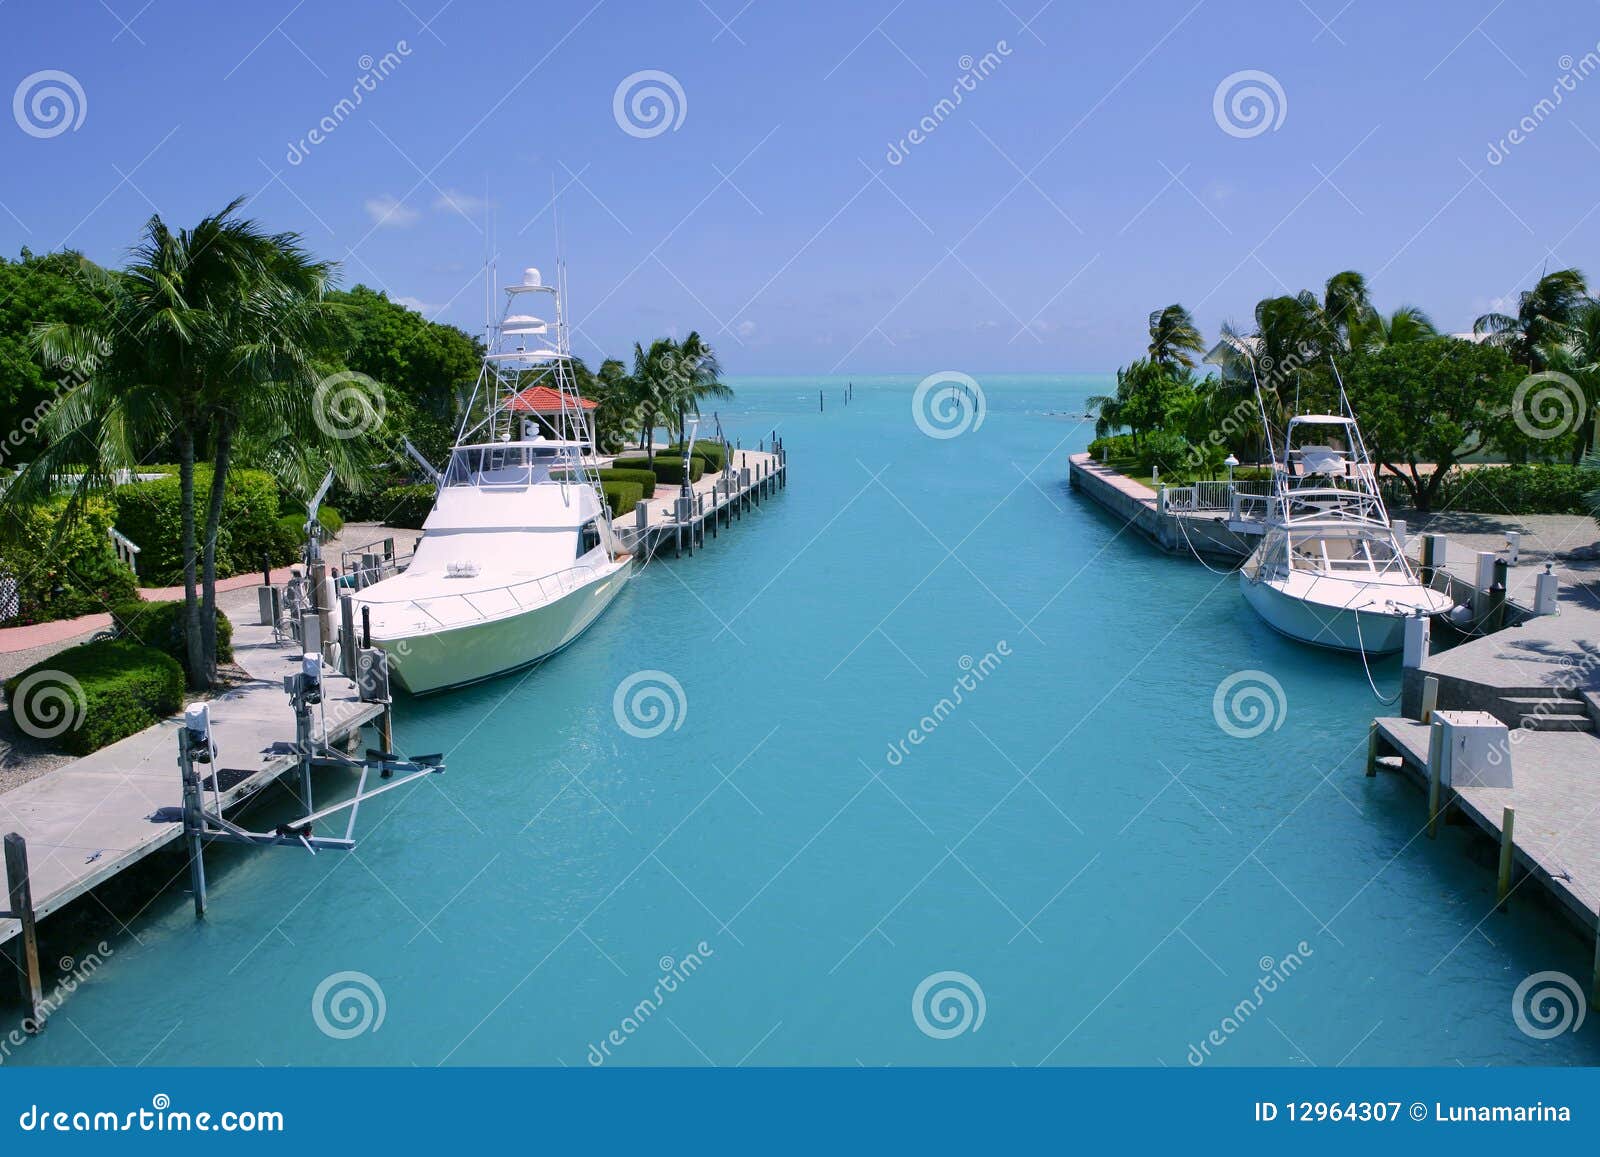 florida keys fishing boats in turquoise waterway